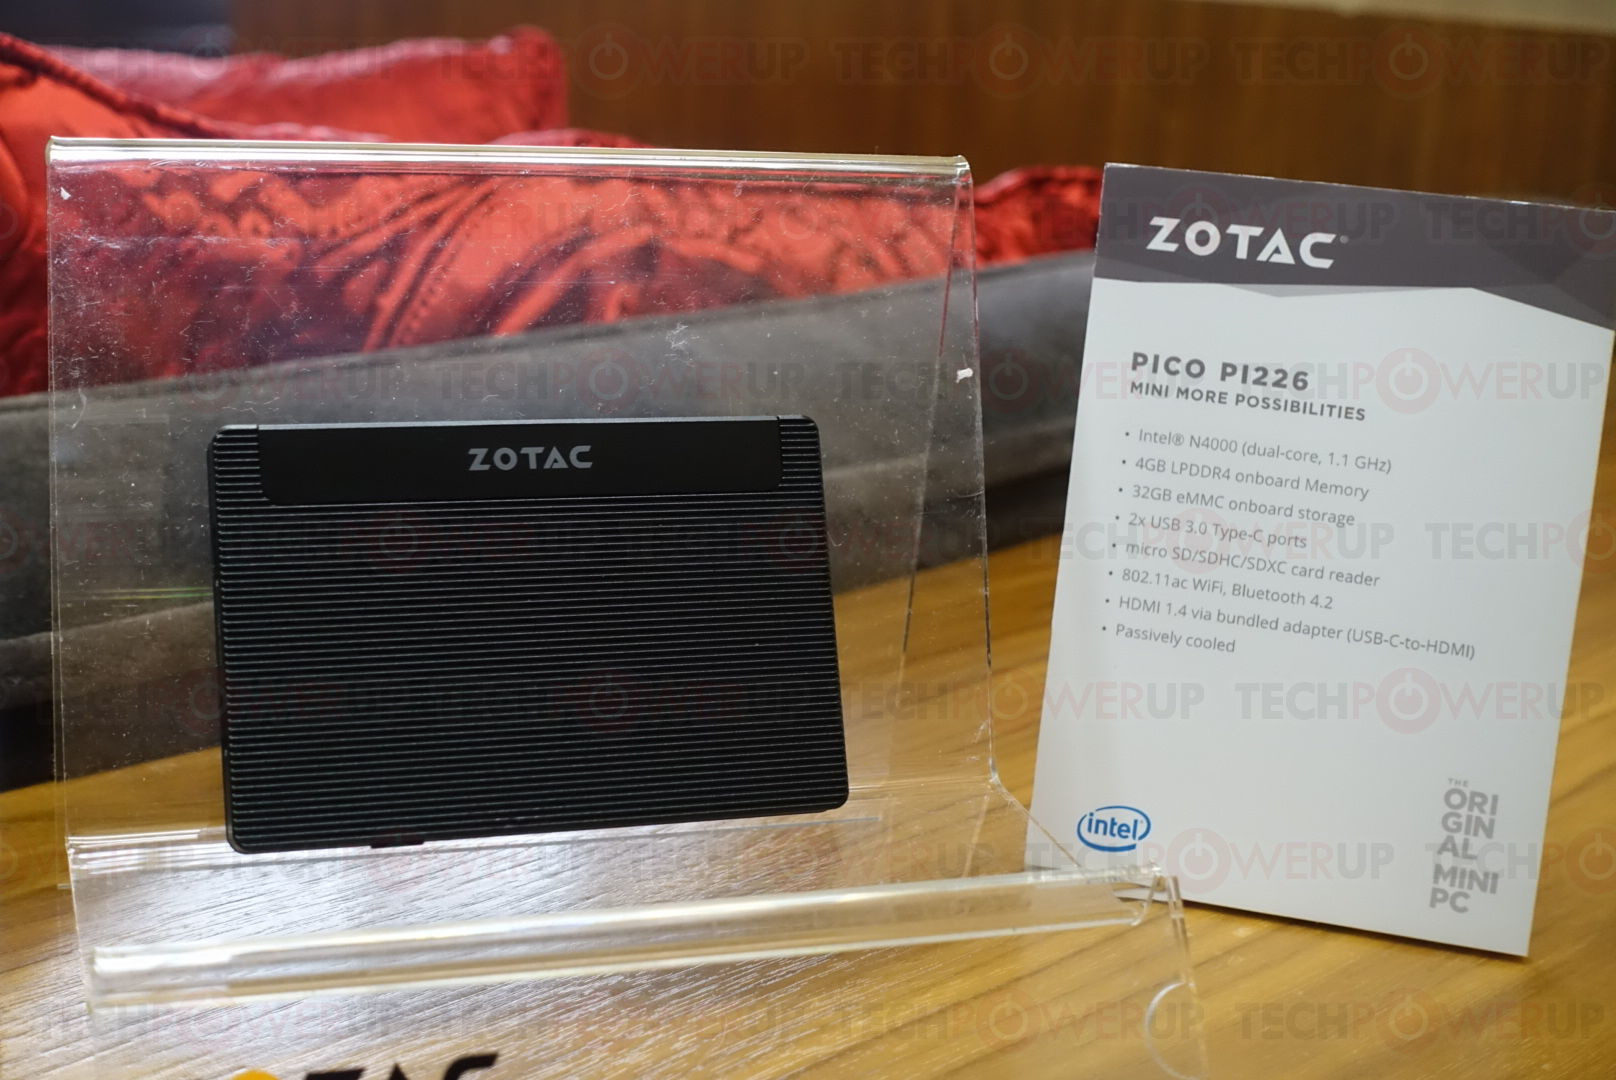 Zotac Pico PI226 quiere ser el mejor mini PC del mercado